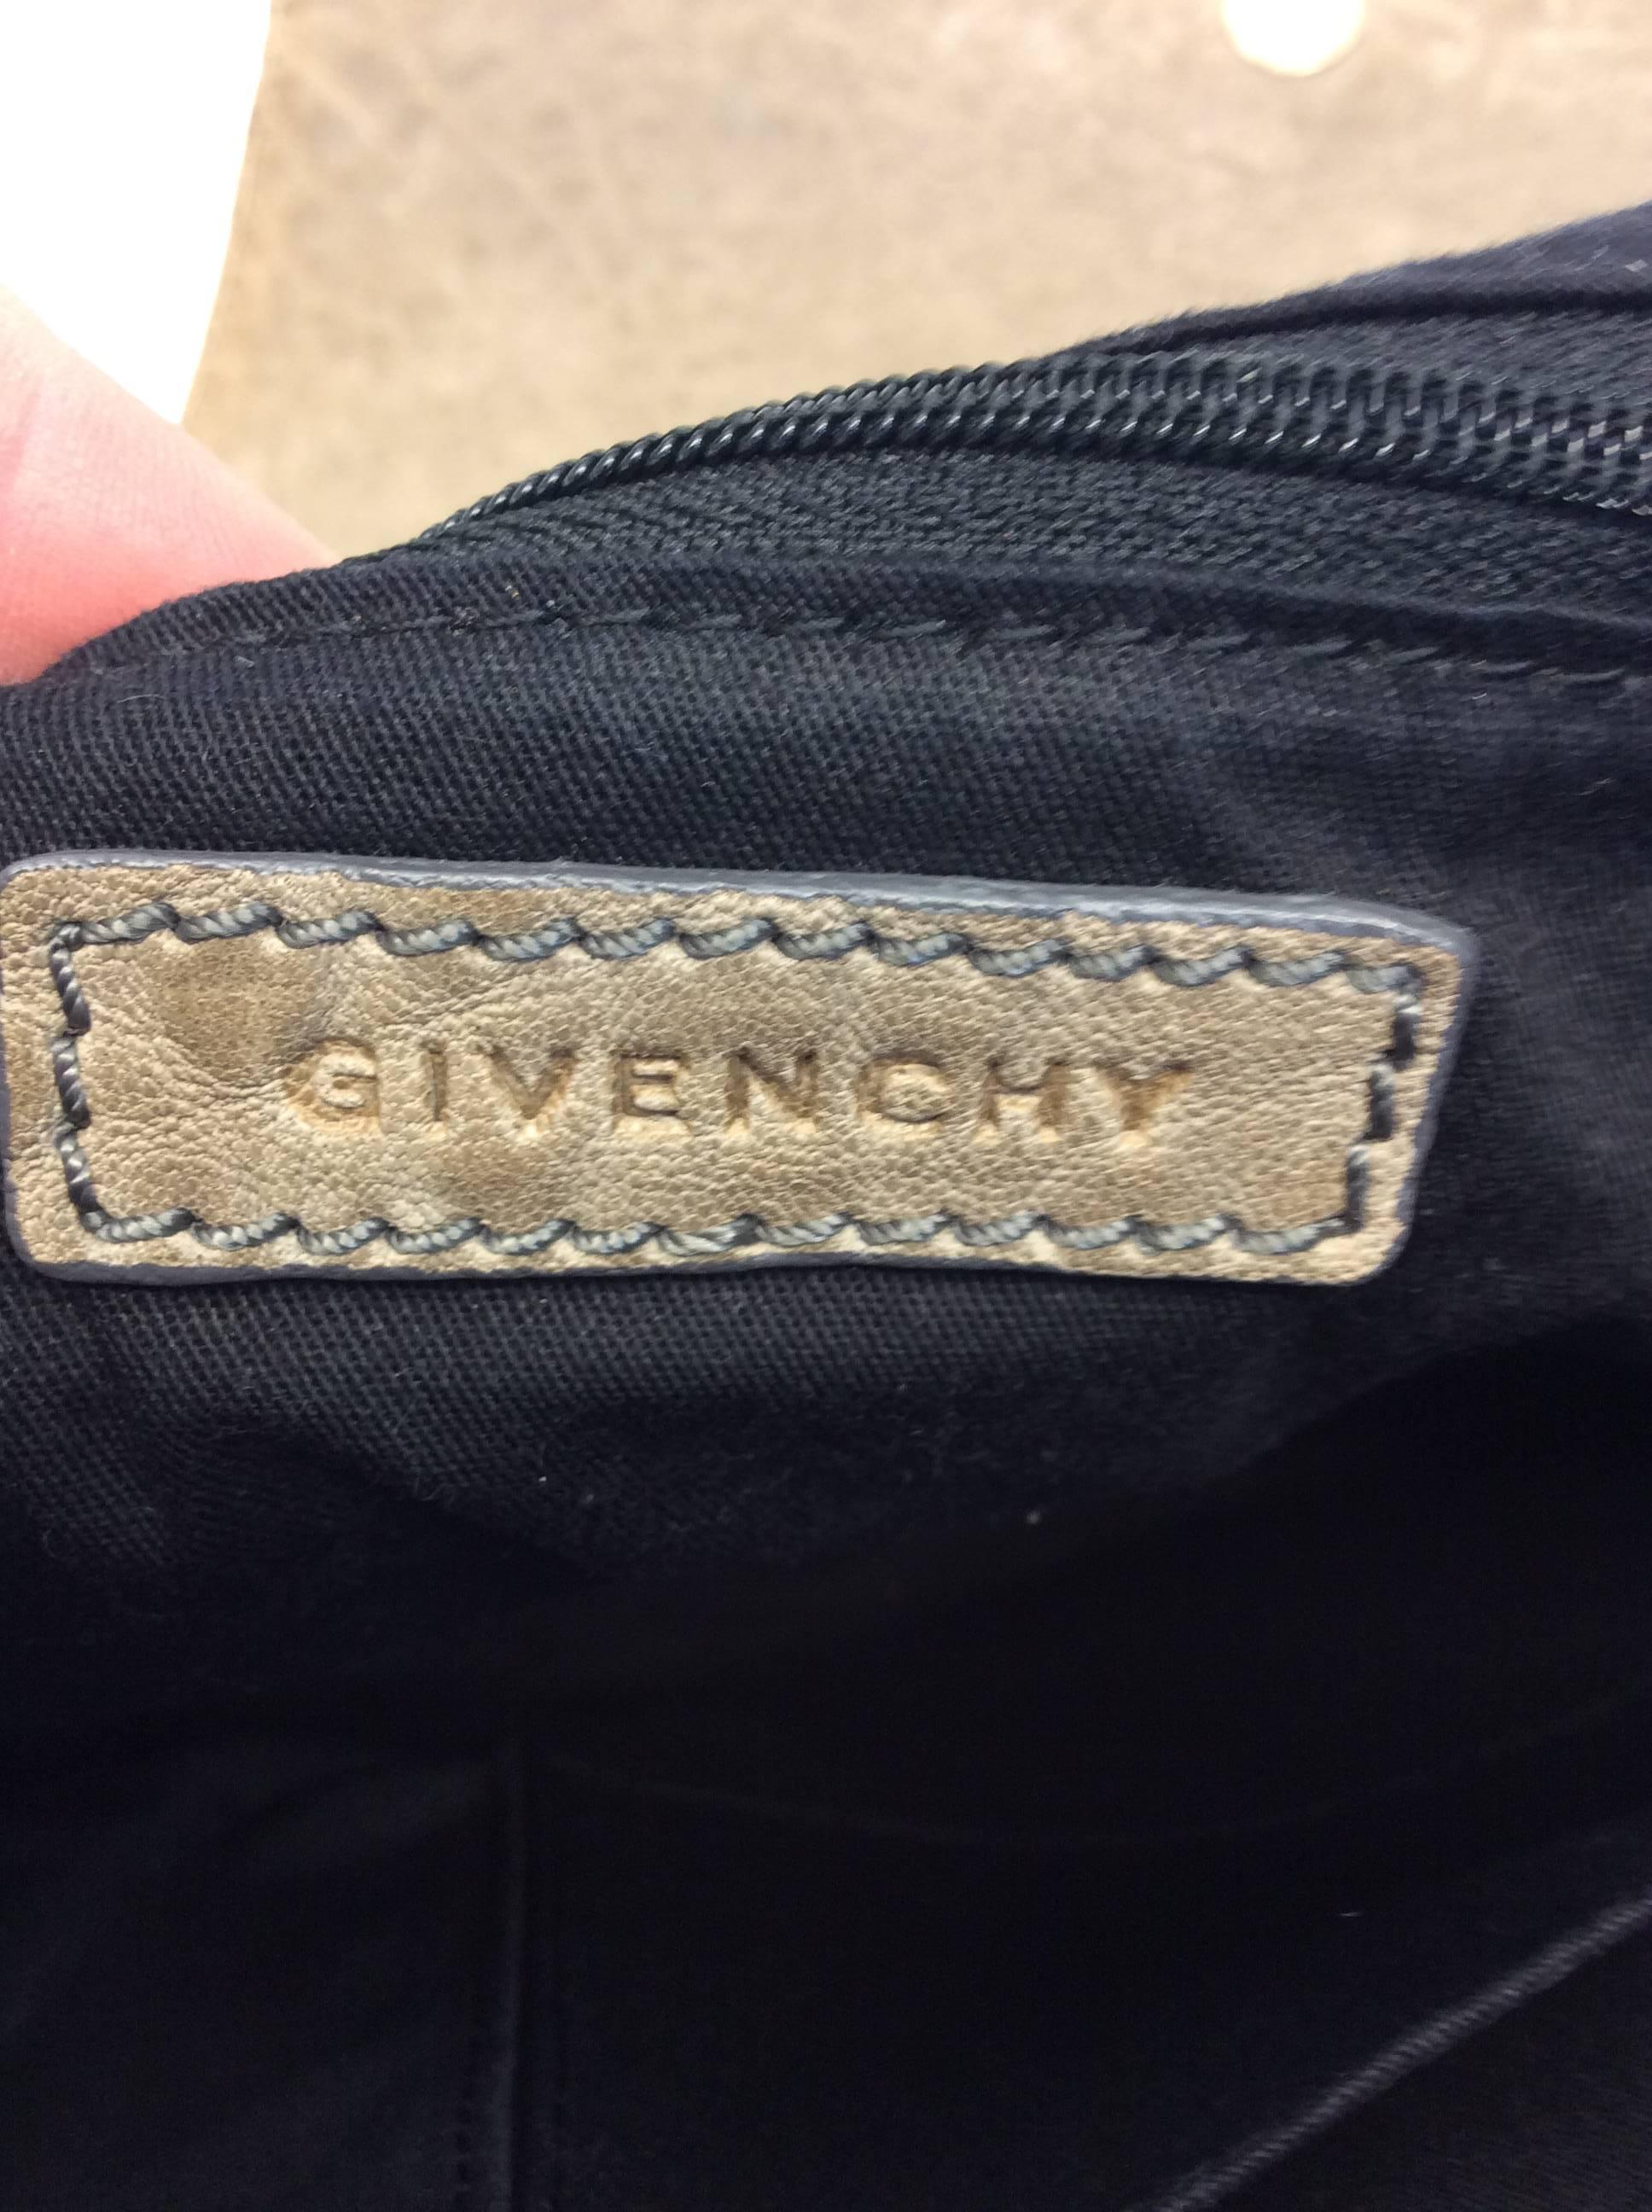 Givenchy Leather Camel Handbag For Sale 2